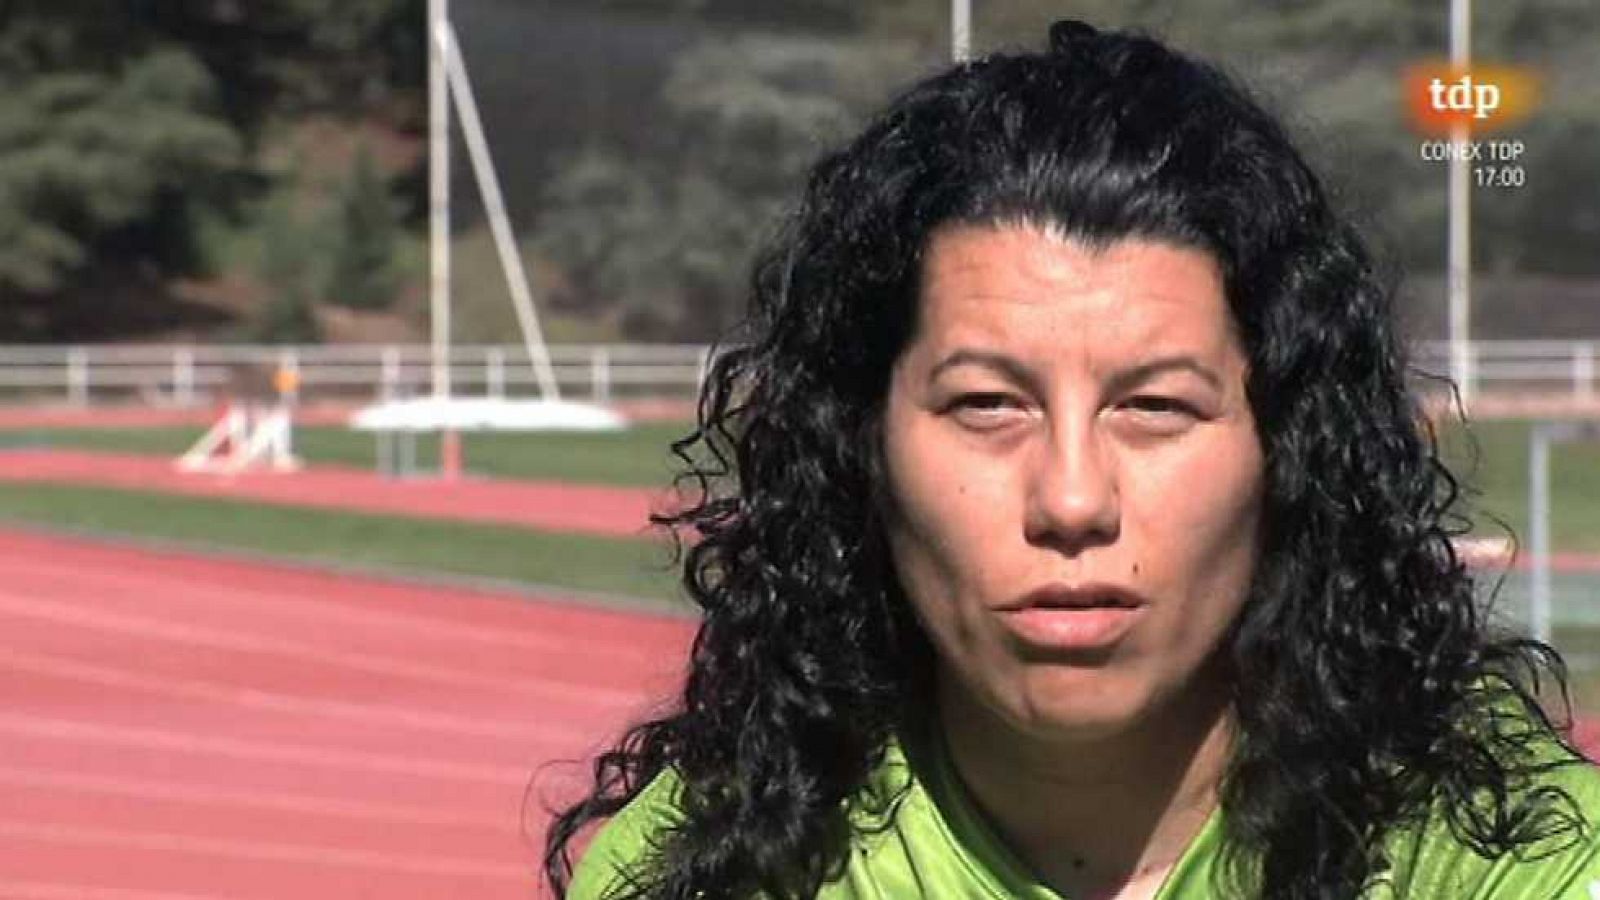 Mujer y deporte - Triatlón: Miriam Álvarez